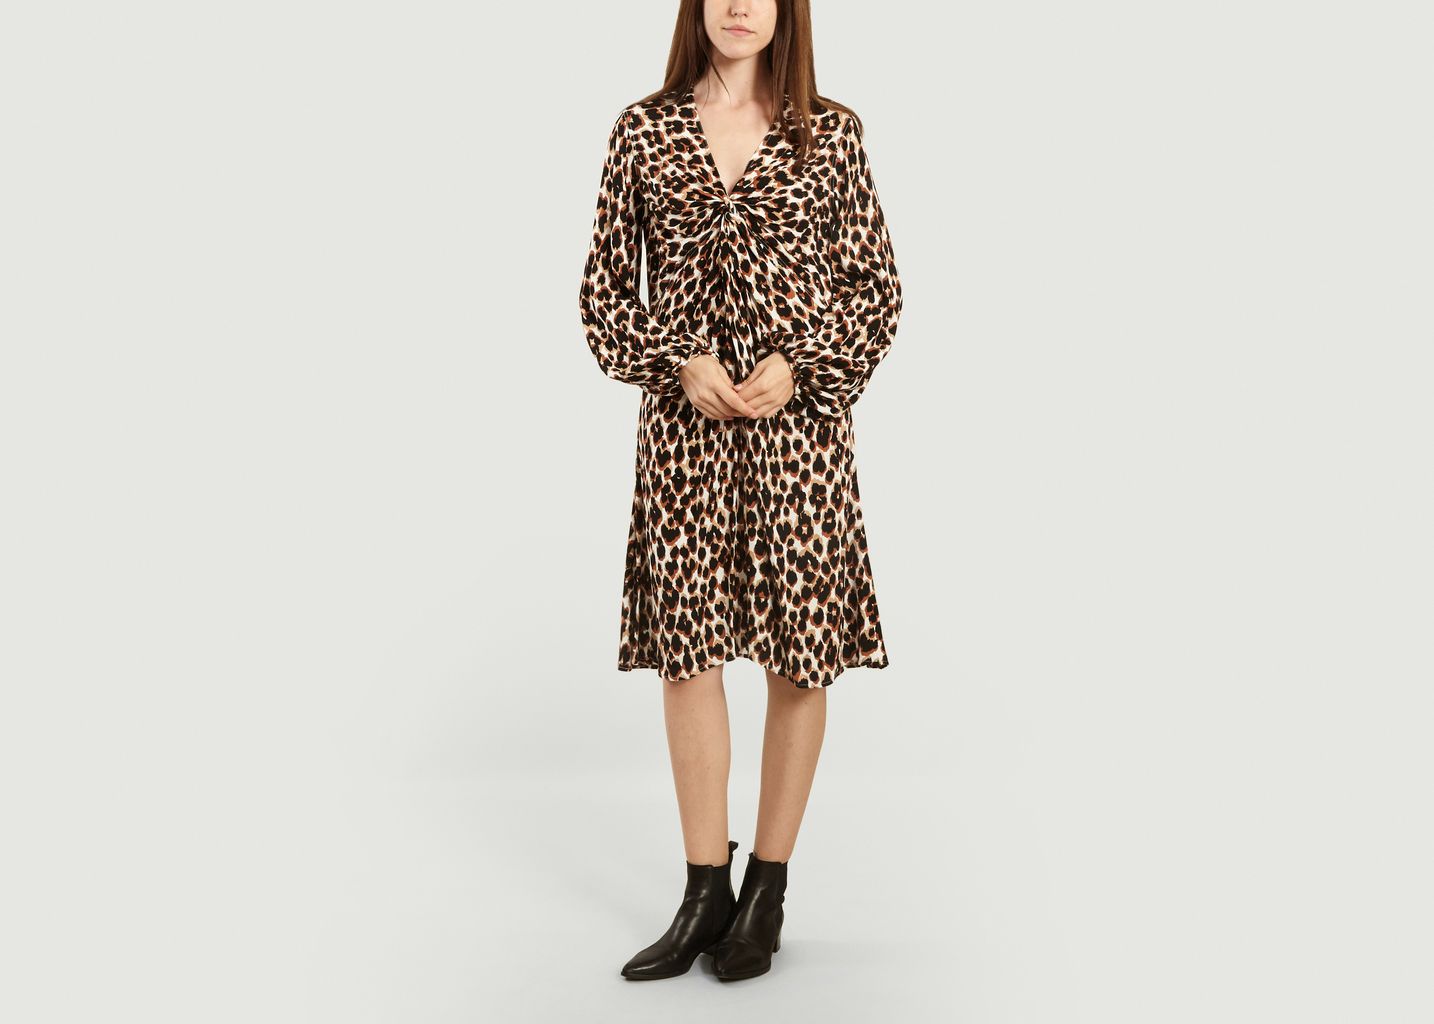 Freesios leopard print dress - By Malene Birger